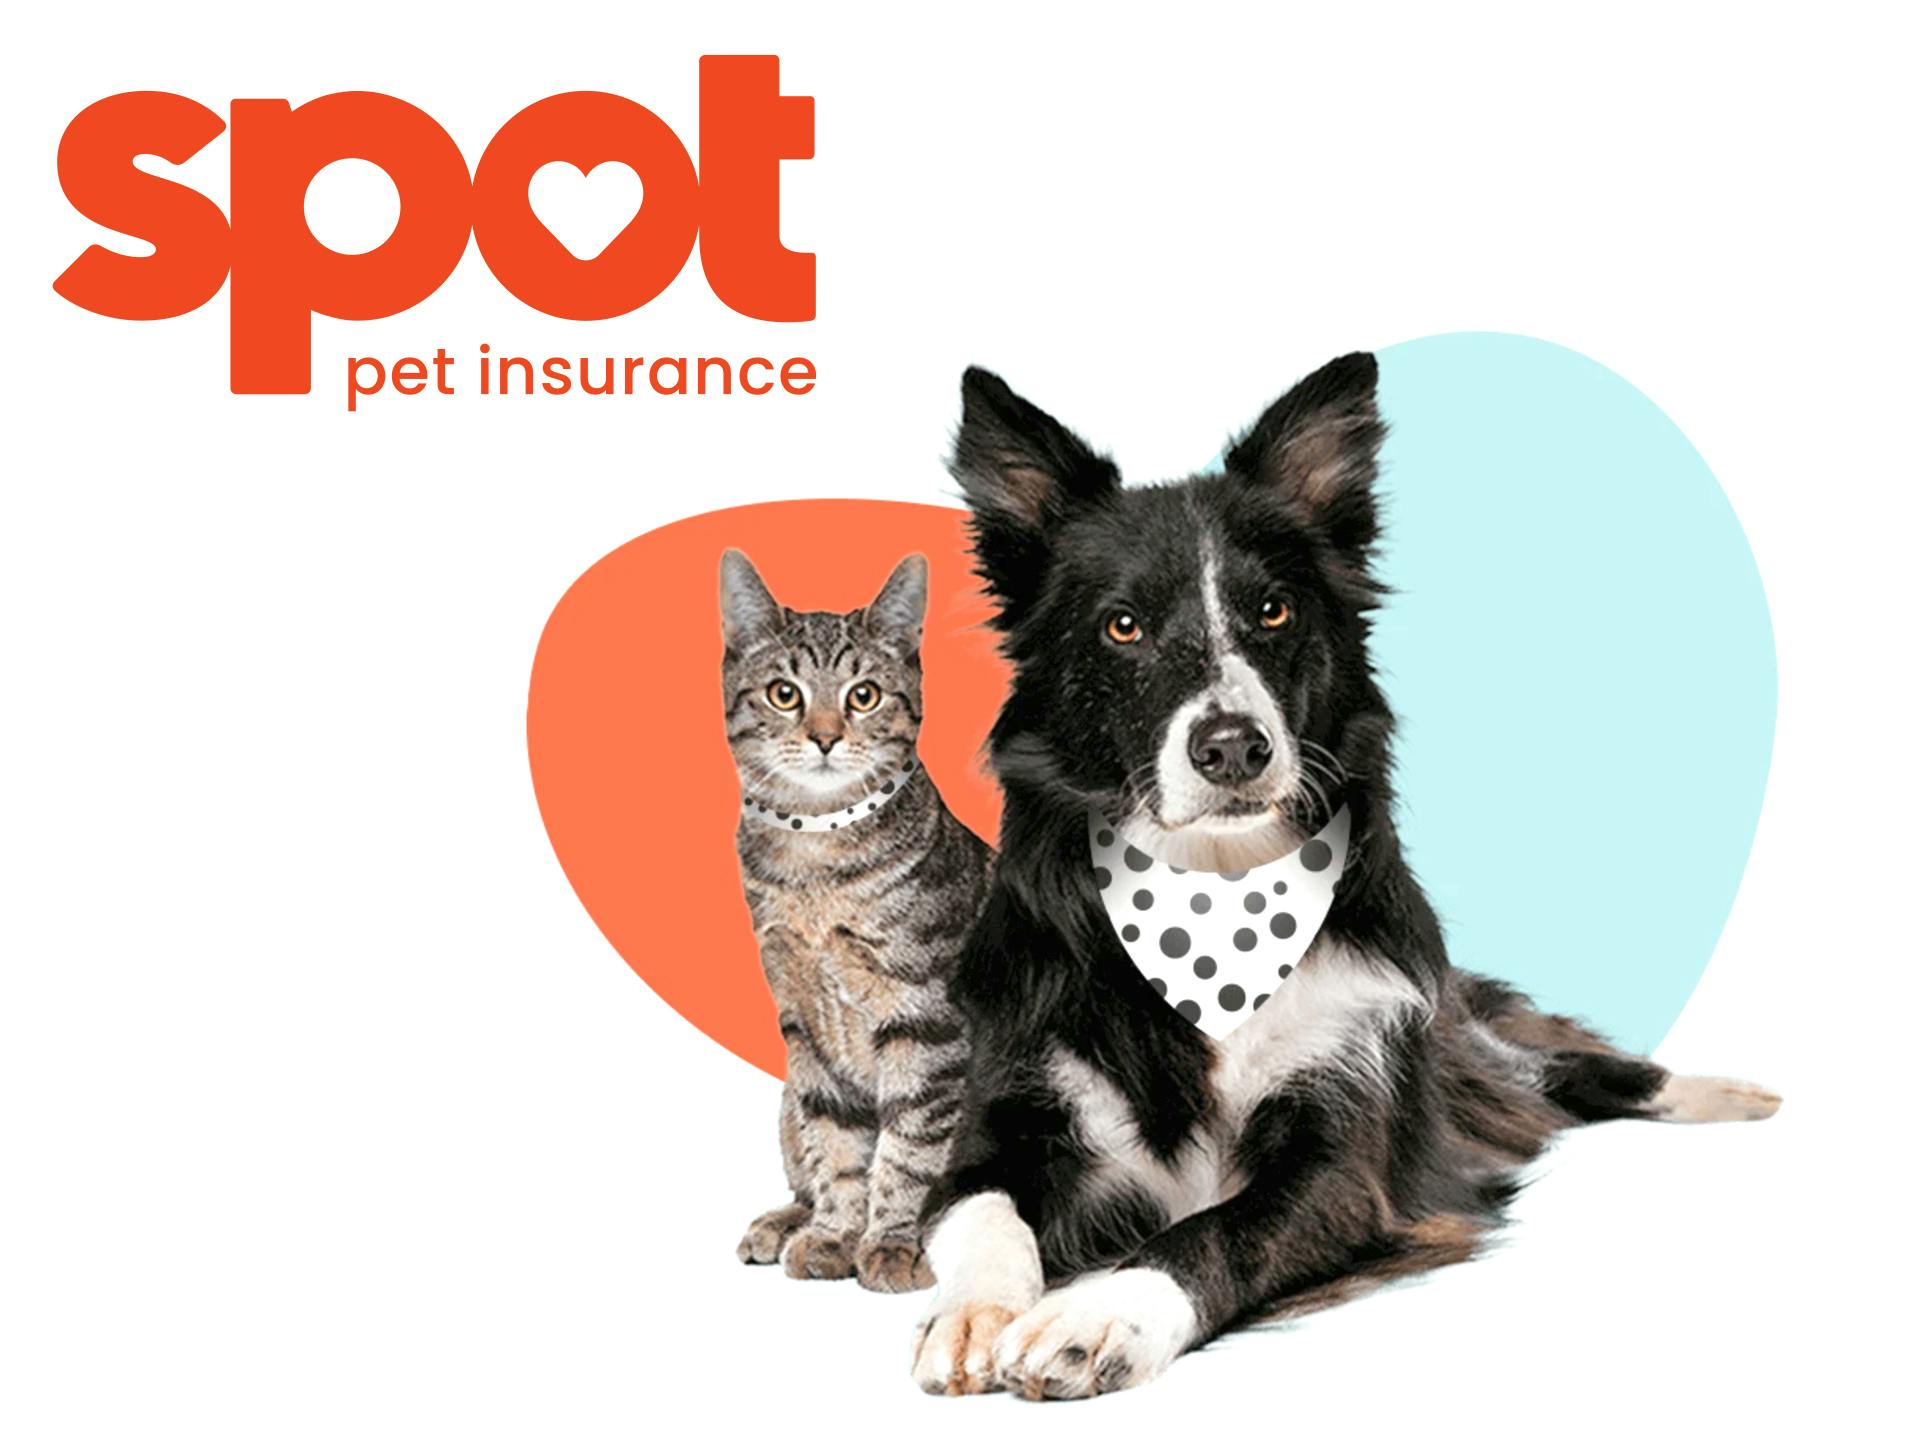 Defaqto 5 Star Rated Pet Insurance, 10% Online Discount